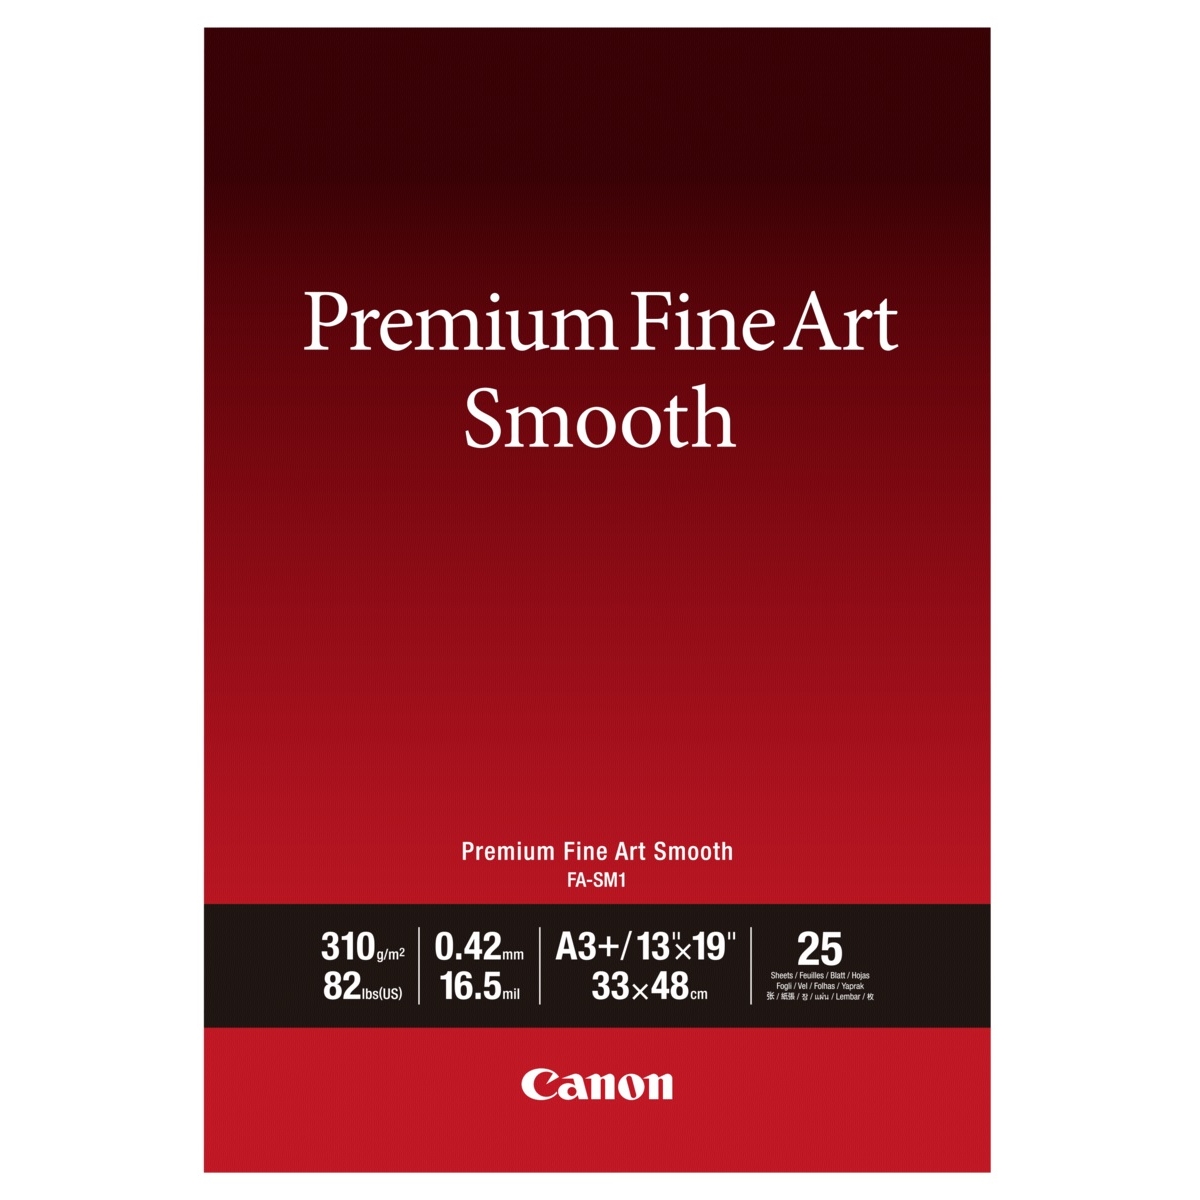 Original Canon FA-SM1 310gsm Premium Fine Art Smooth A3+ Cotton Matte Photo Paper - 25 Sheets (1711C004)